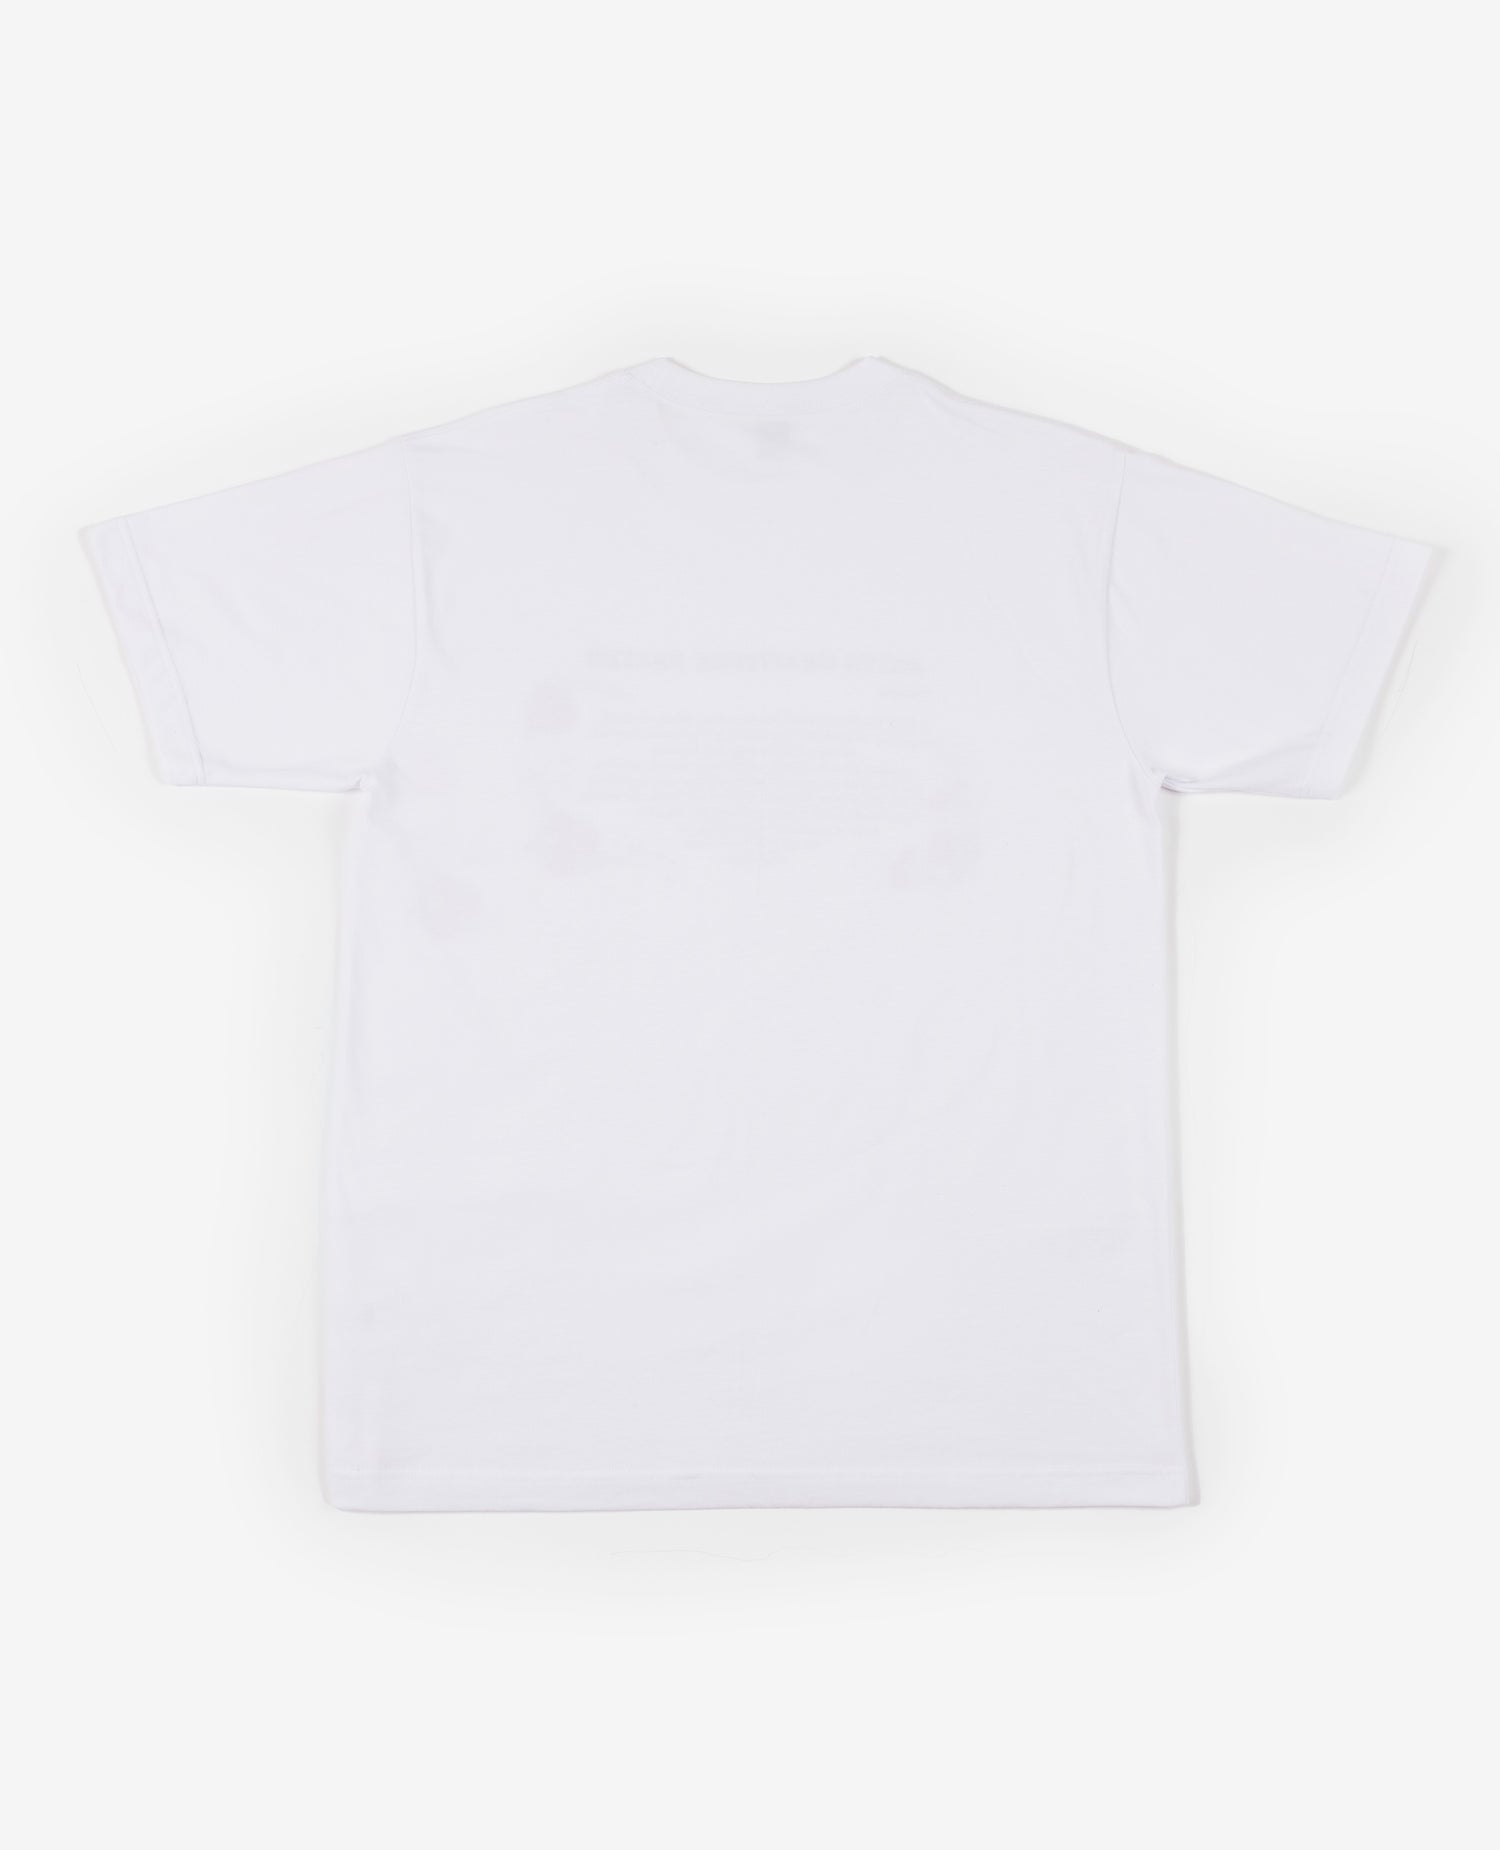 Patta Prayer T-Shirt (White)